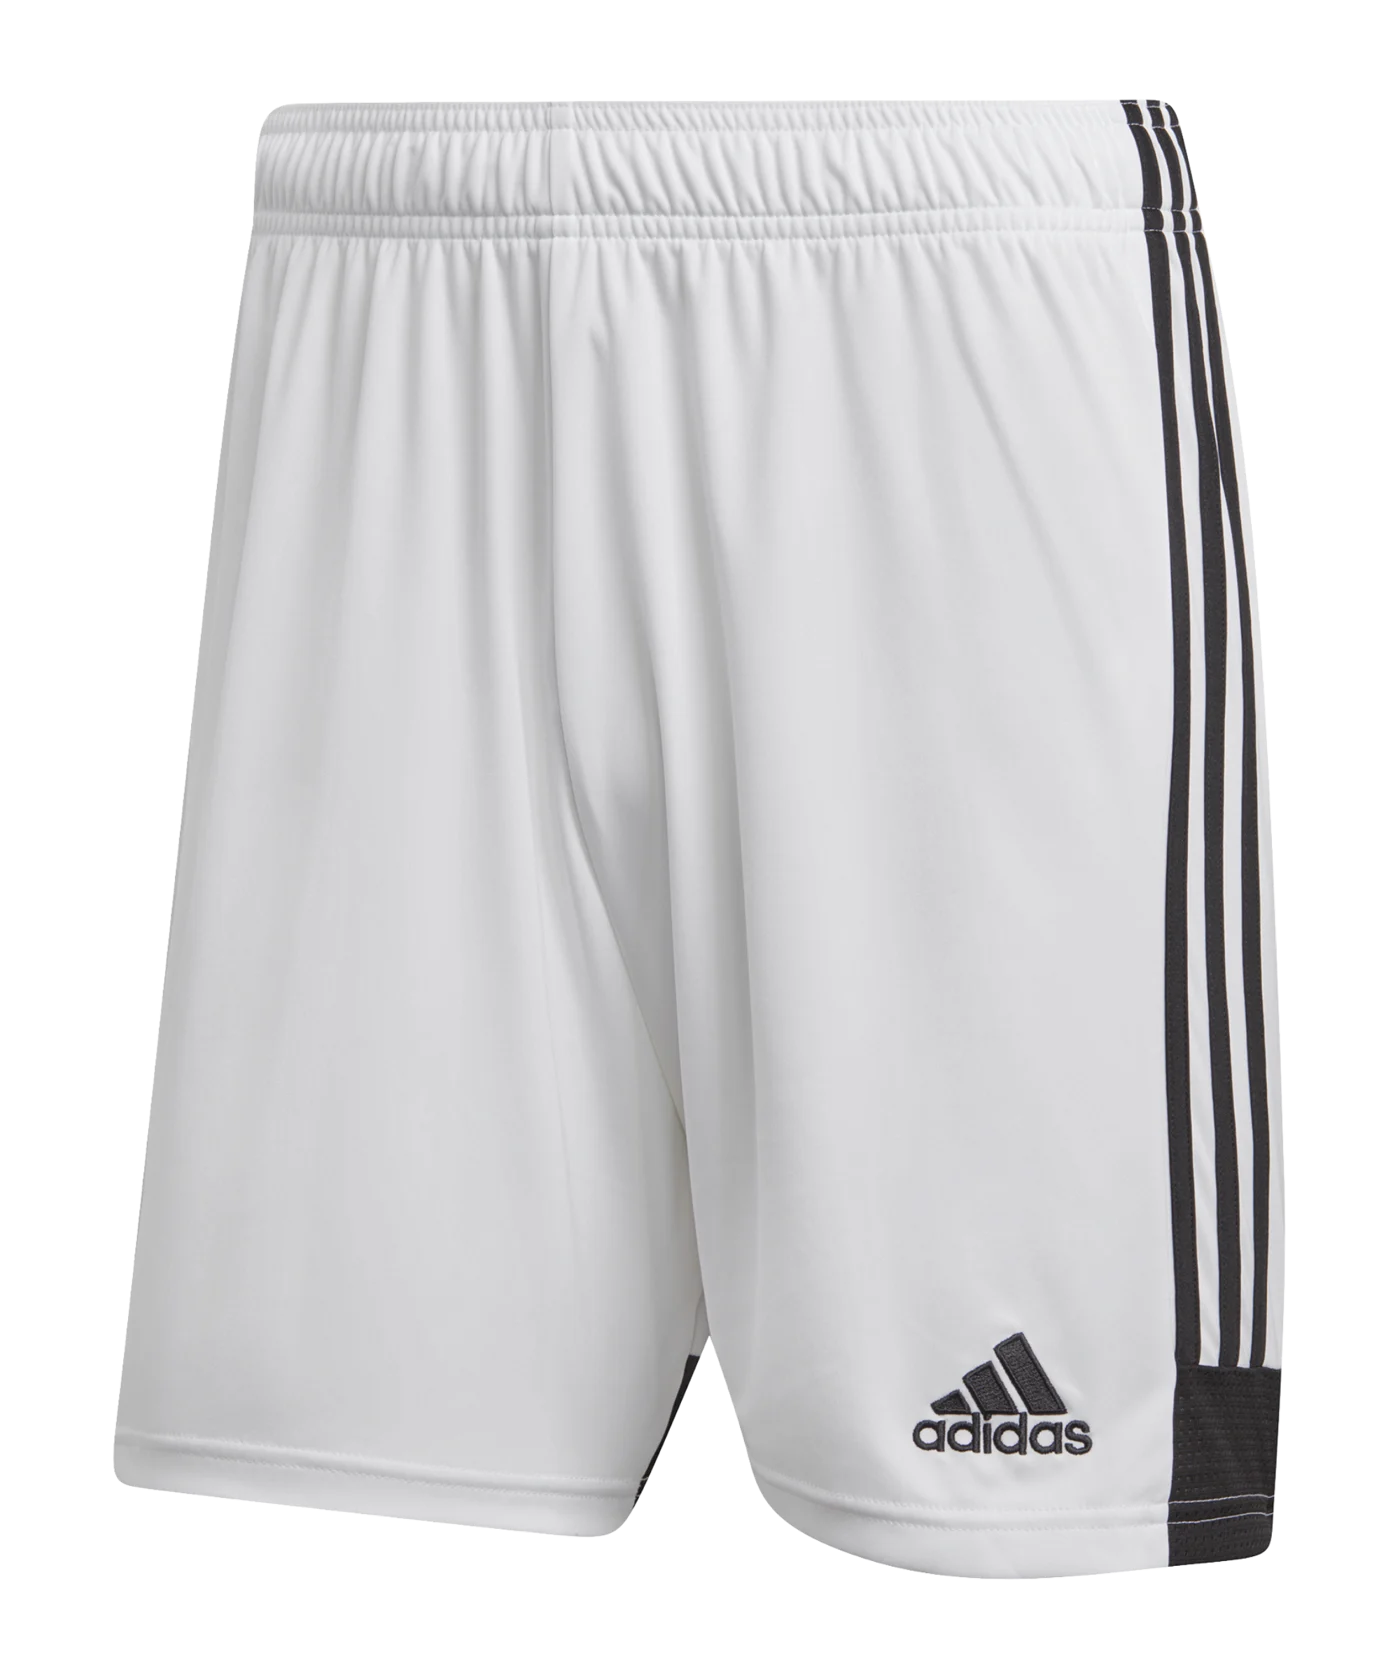 Adidas Kinder Shorts Tastigo 19 weiß-schwarz